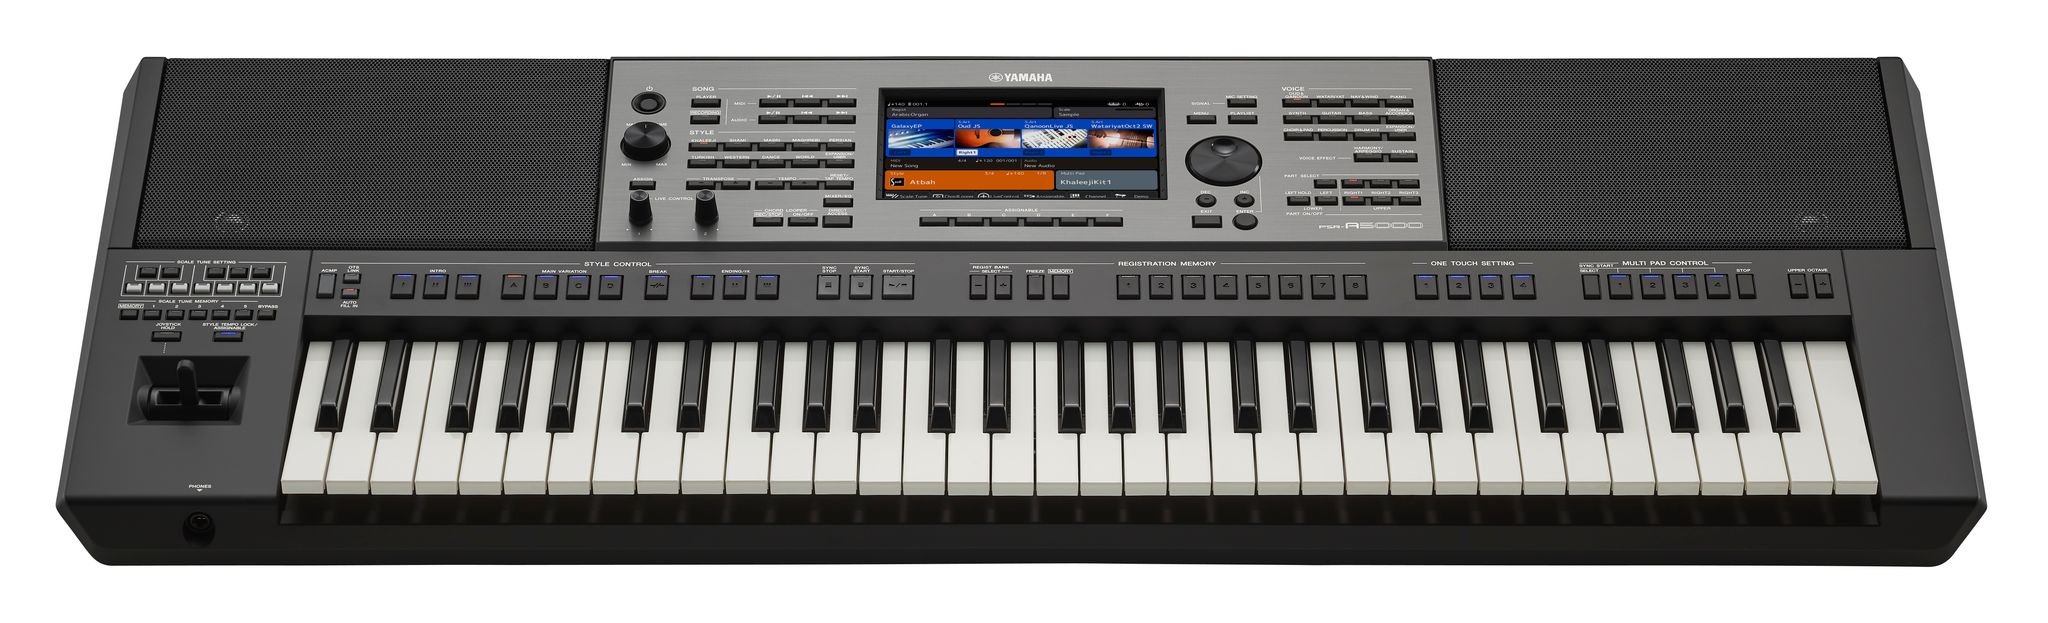 Yamaha Psr-a5000 - Clavier Arrangeur - Variation 3